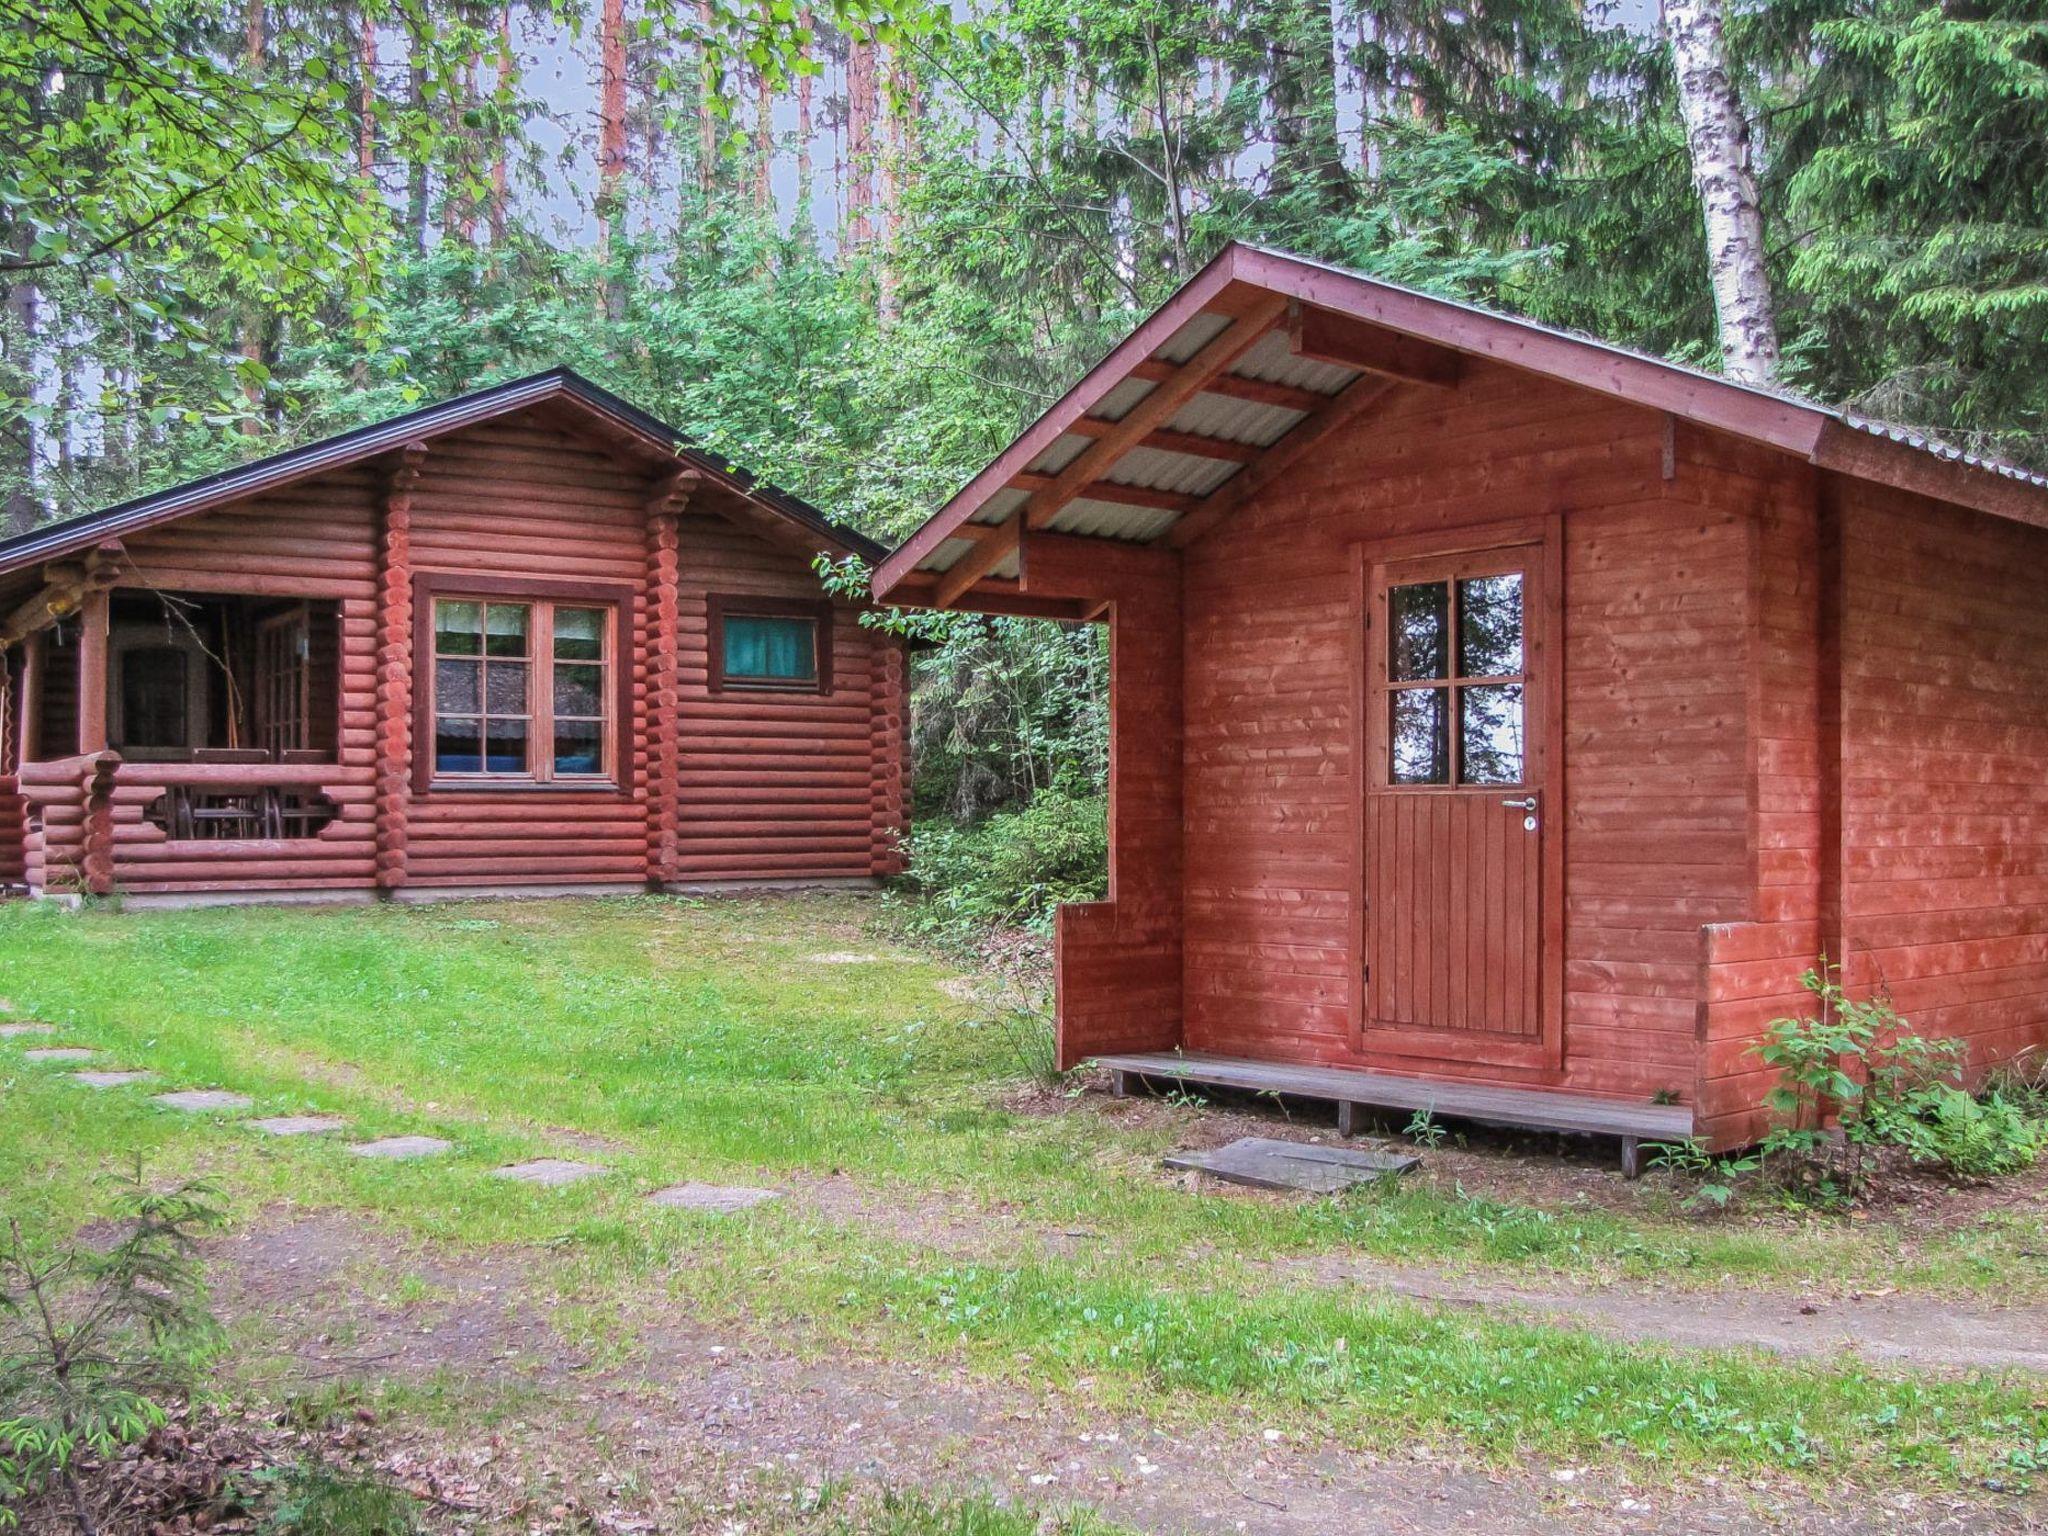 Photo 1 - 1 bedroom House in Savonlinna with sauna